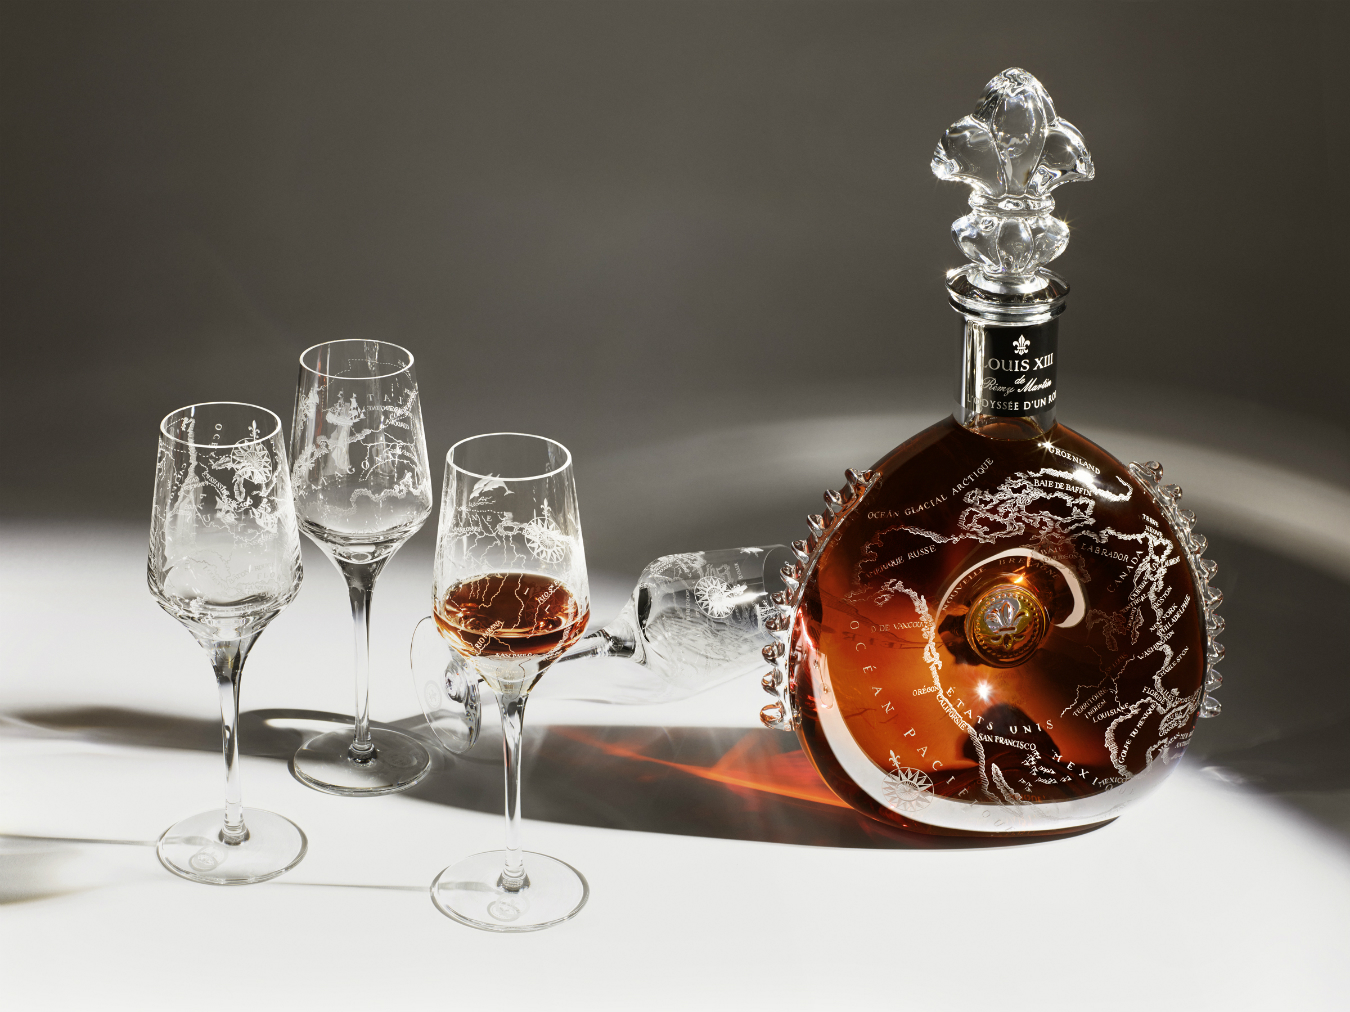 Louis XIII - A Cognac with a Soul